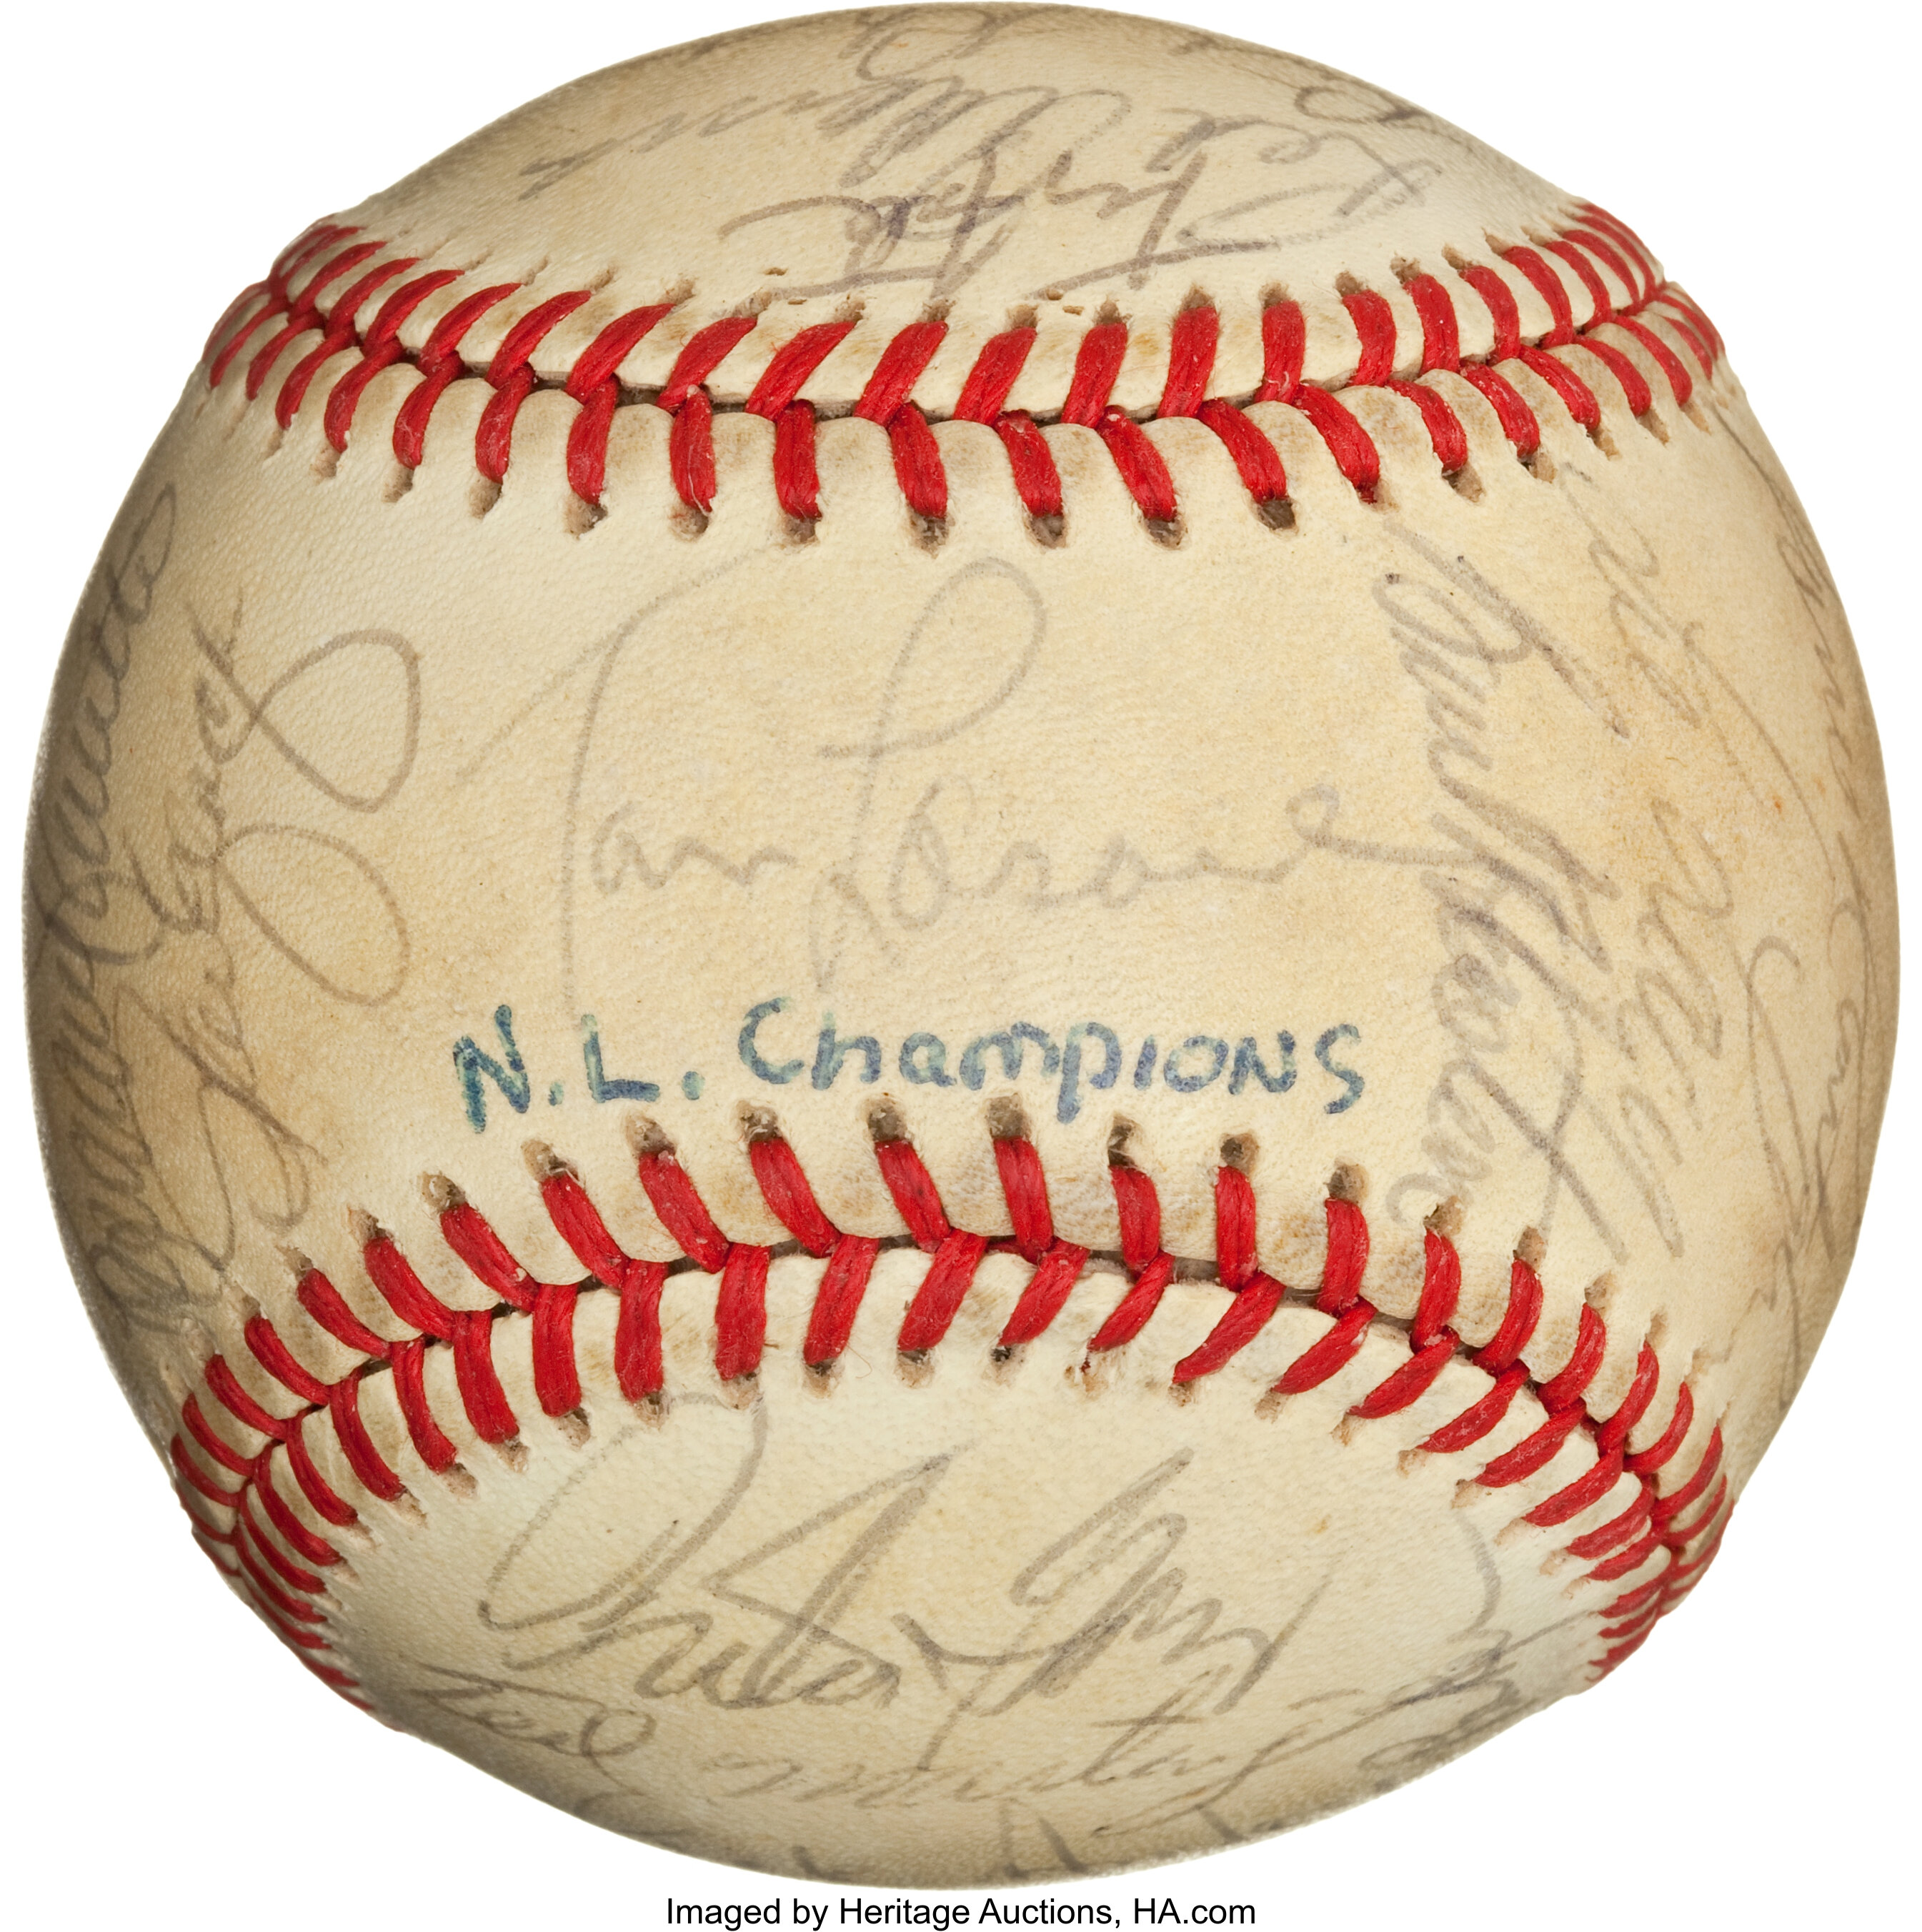 Team Autographed Signed Dodgers Baseball 